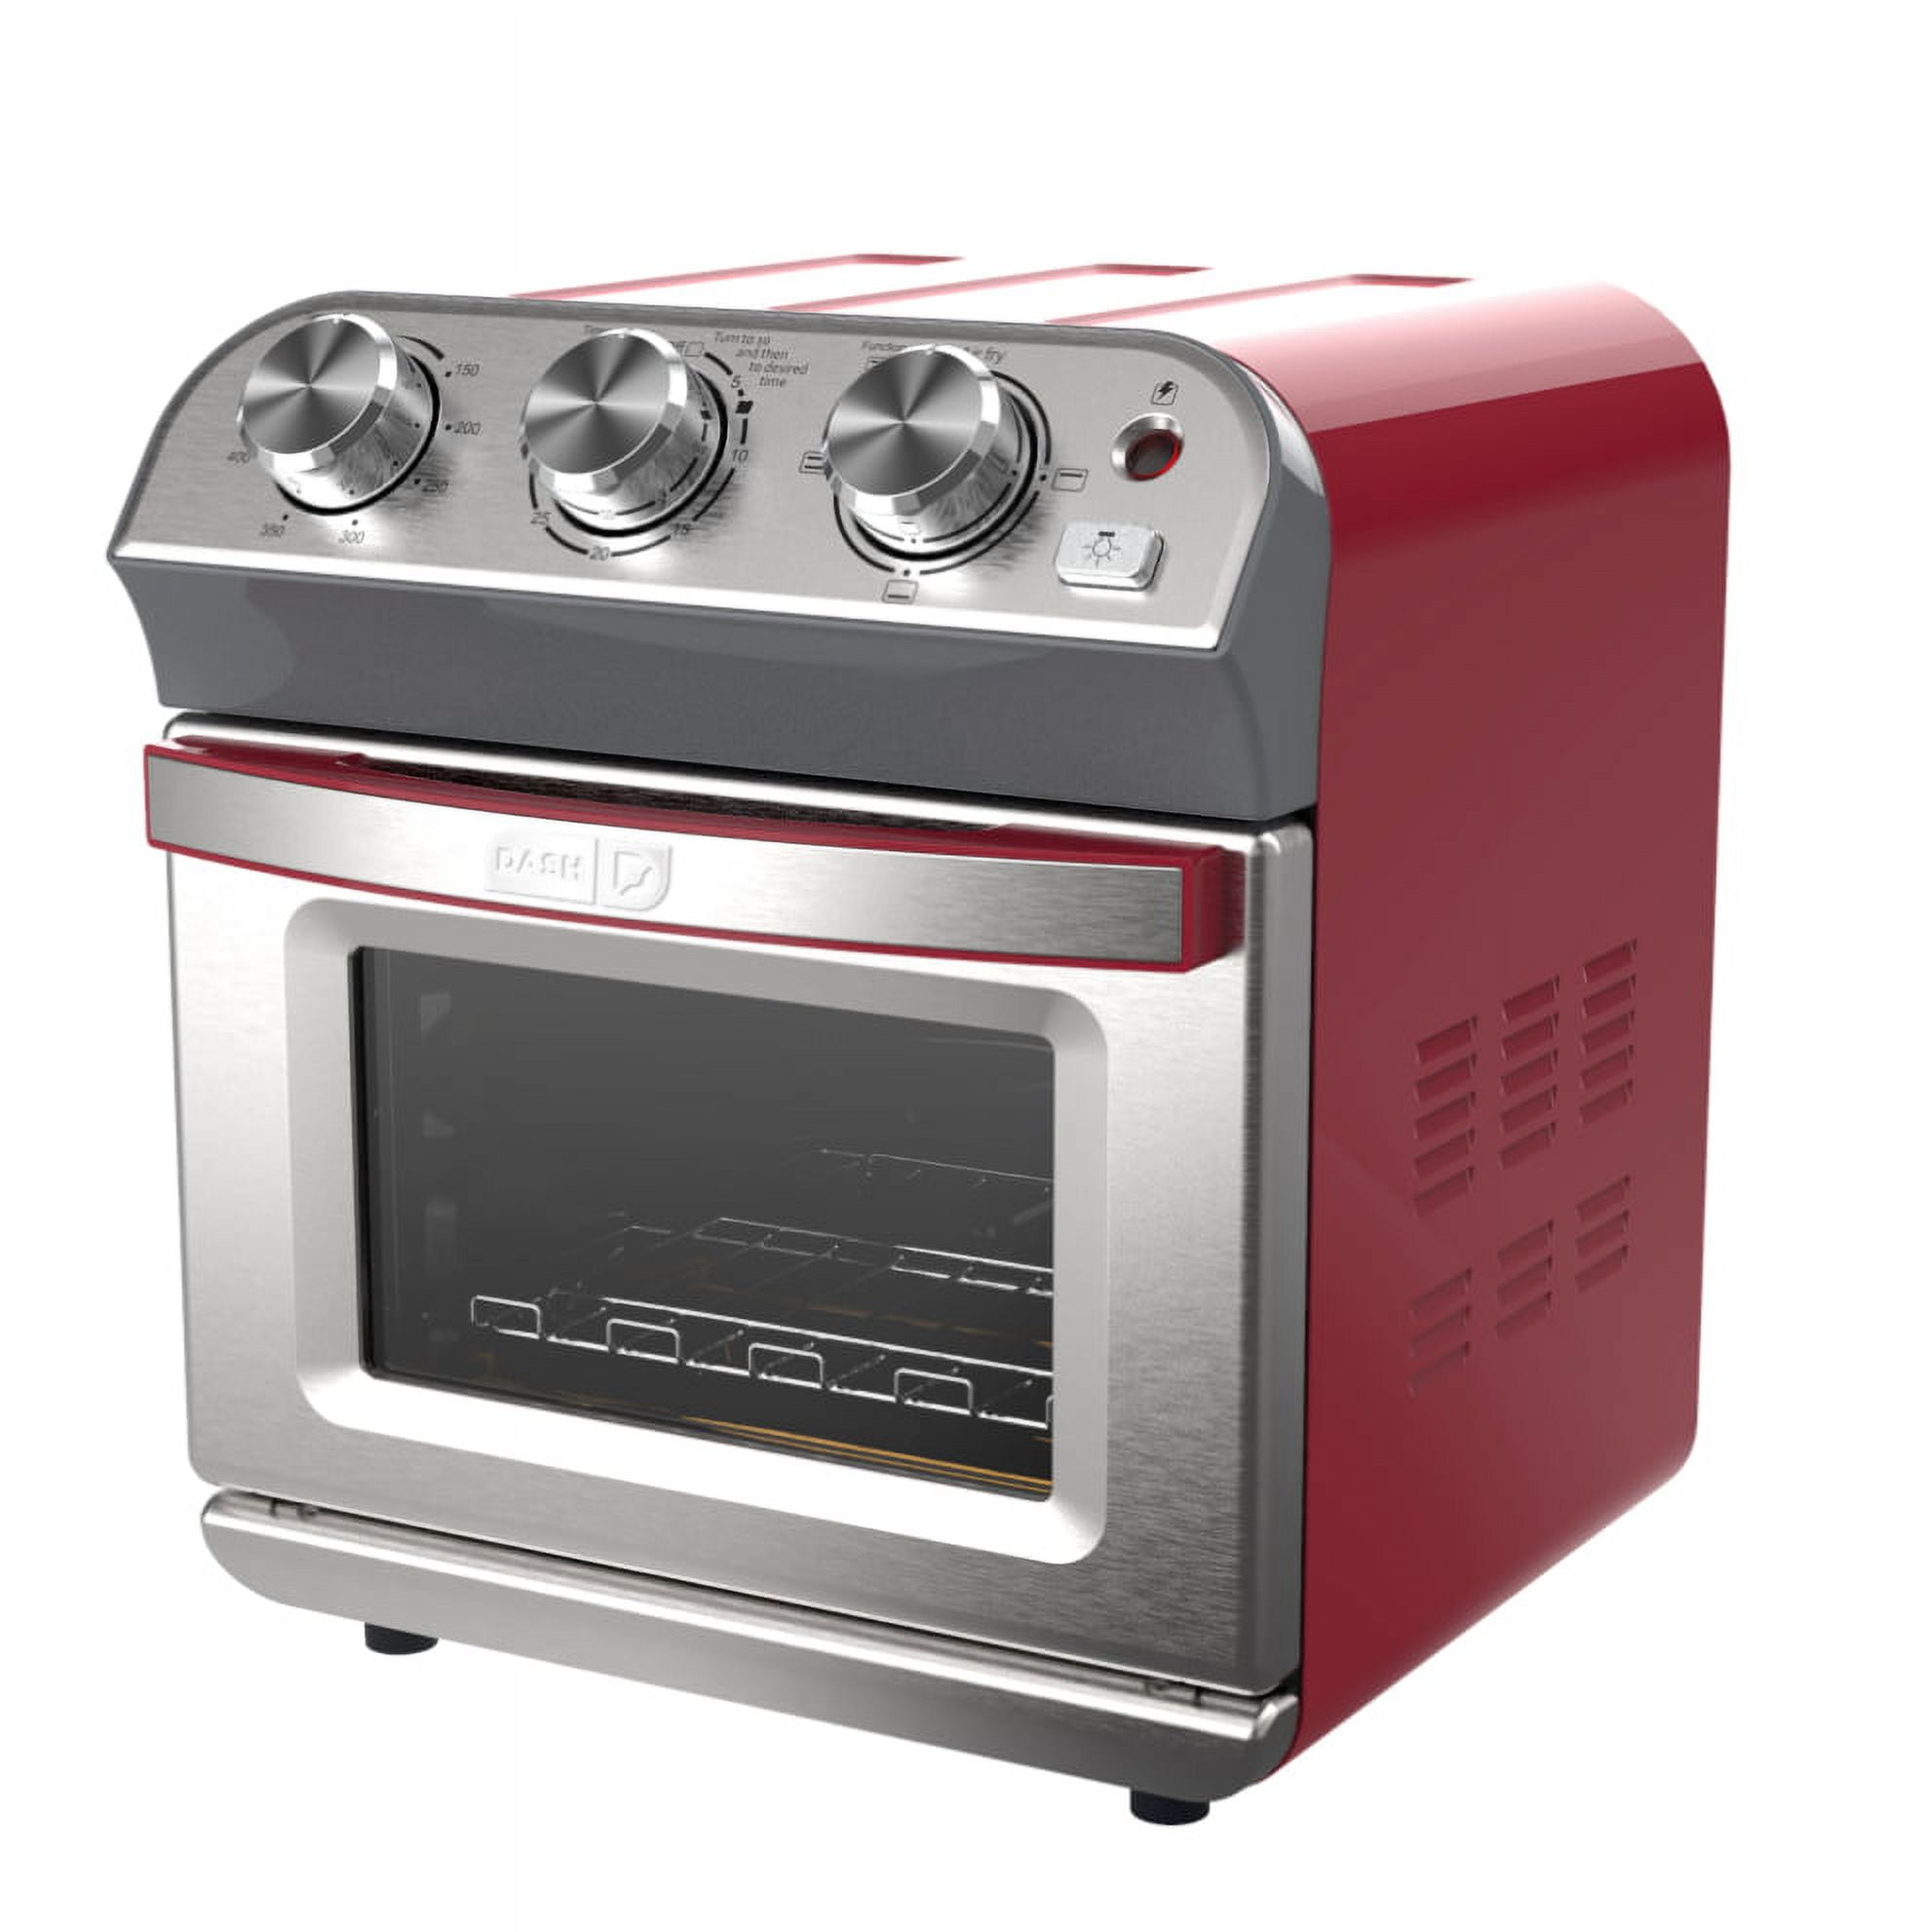 Pensonic Air Fryer Oven 10L